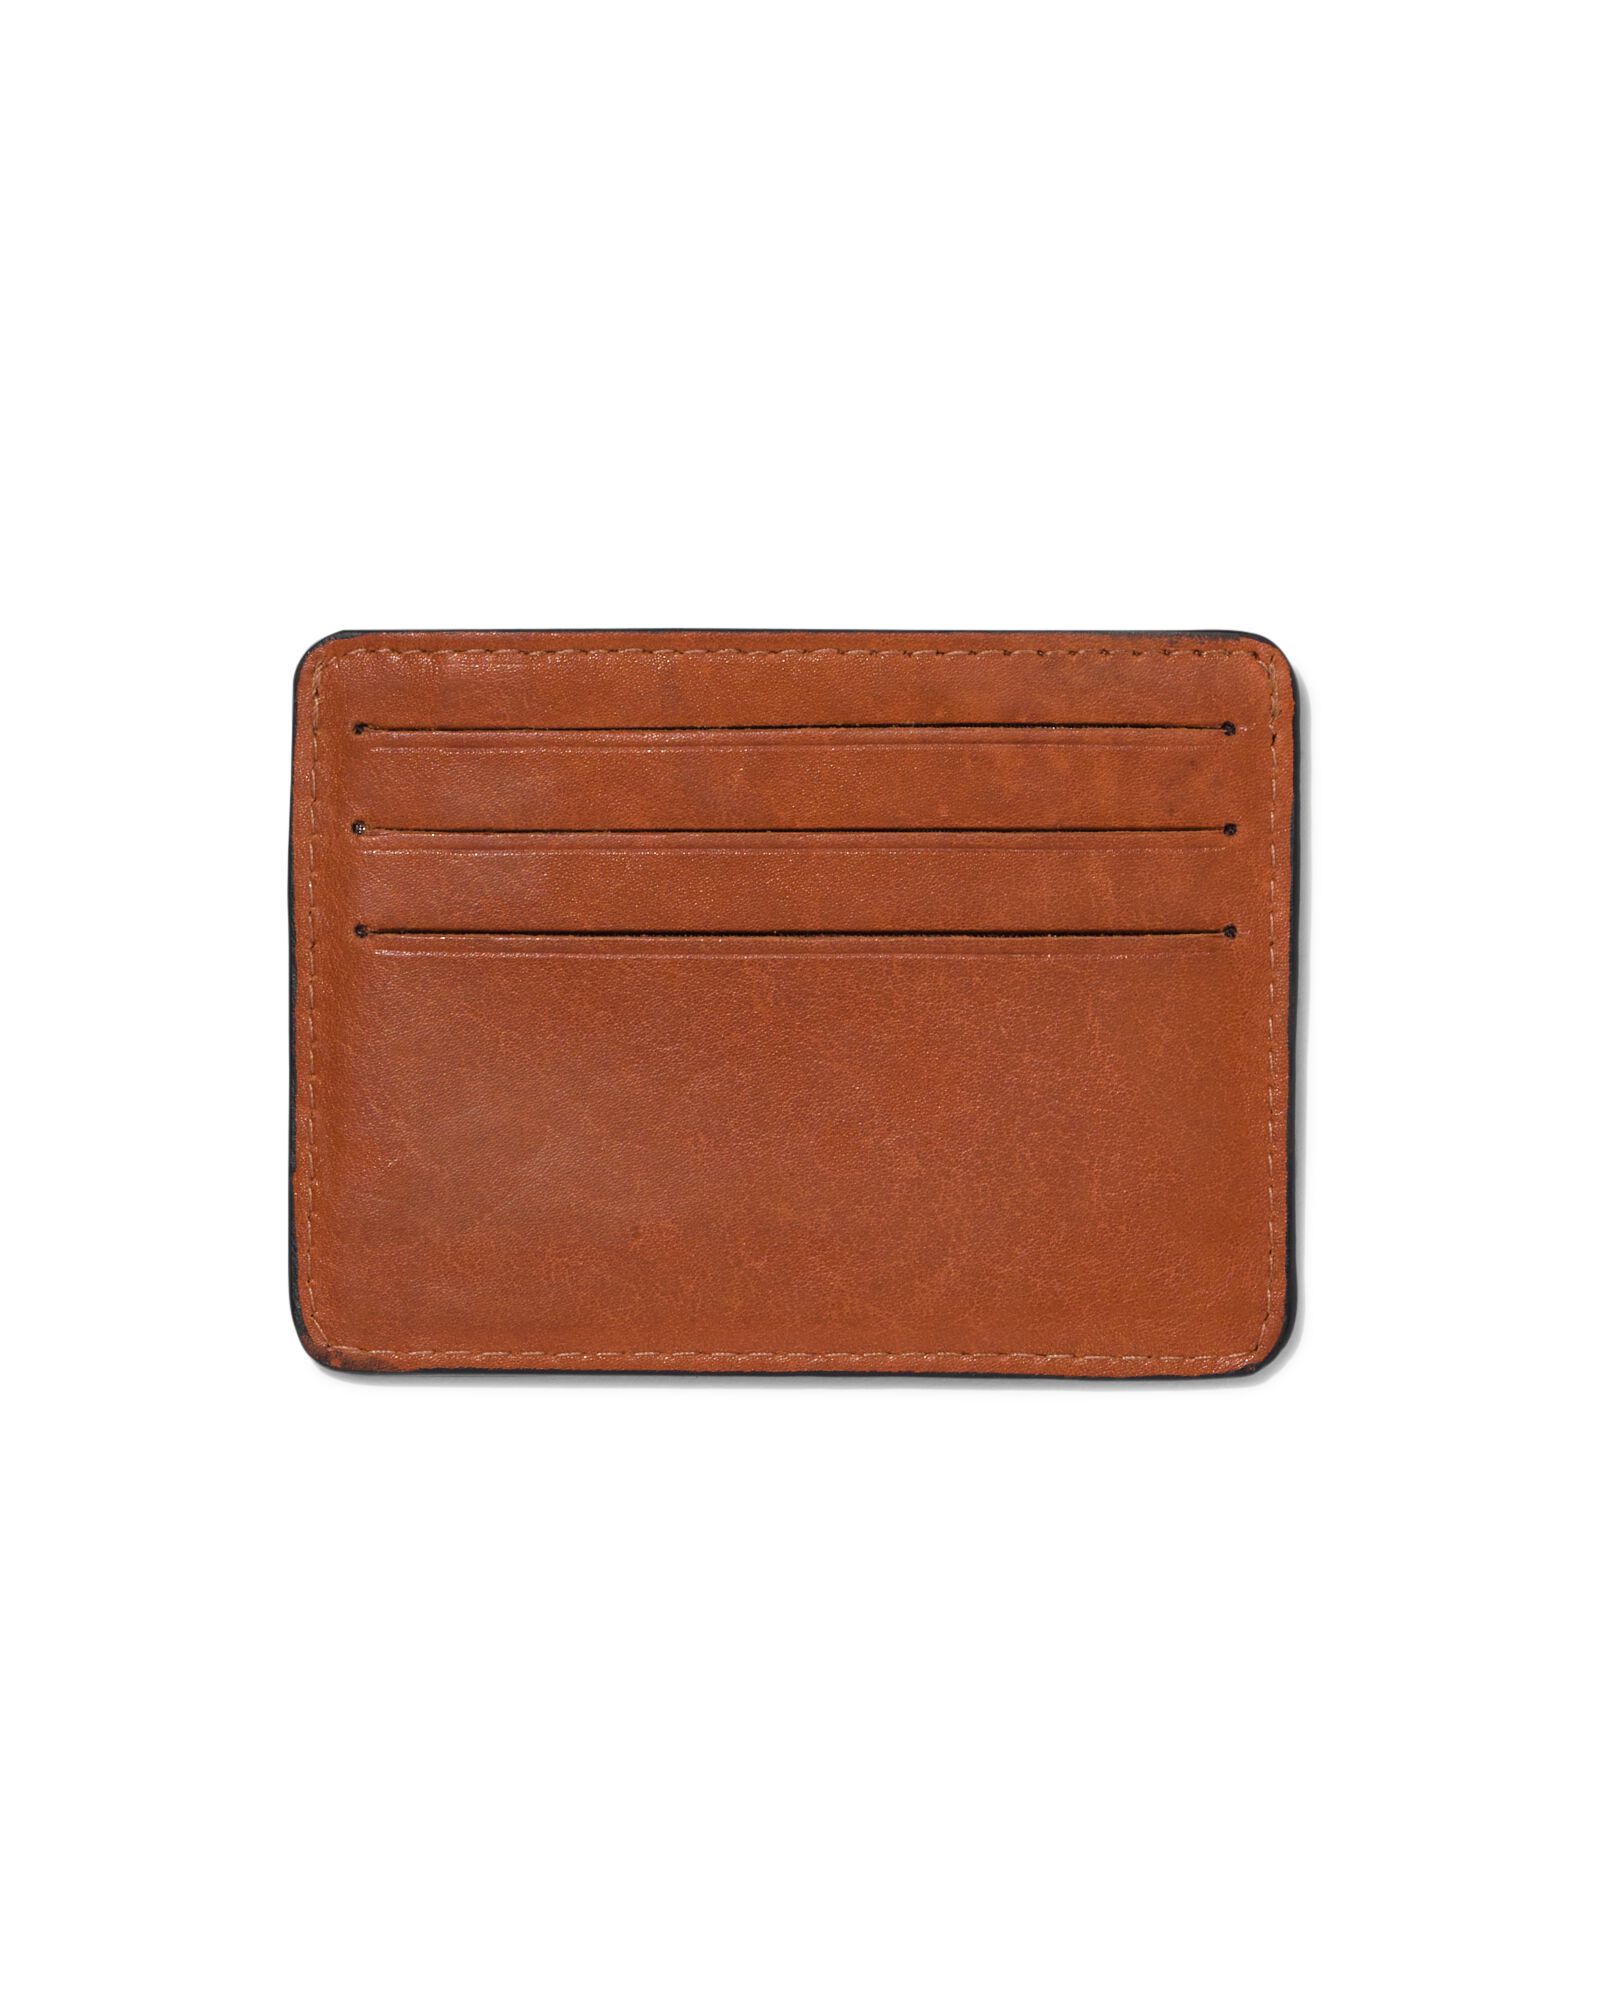 porte-cartes cuir marron RFID 7.5x10 - 18110040 - HEMA